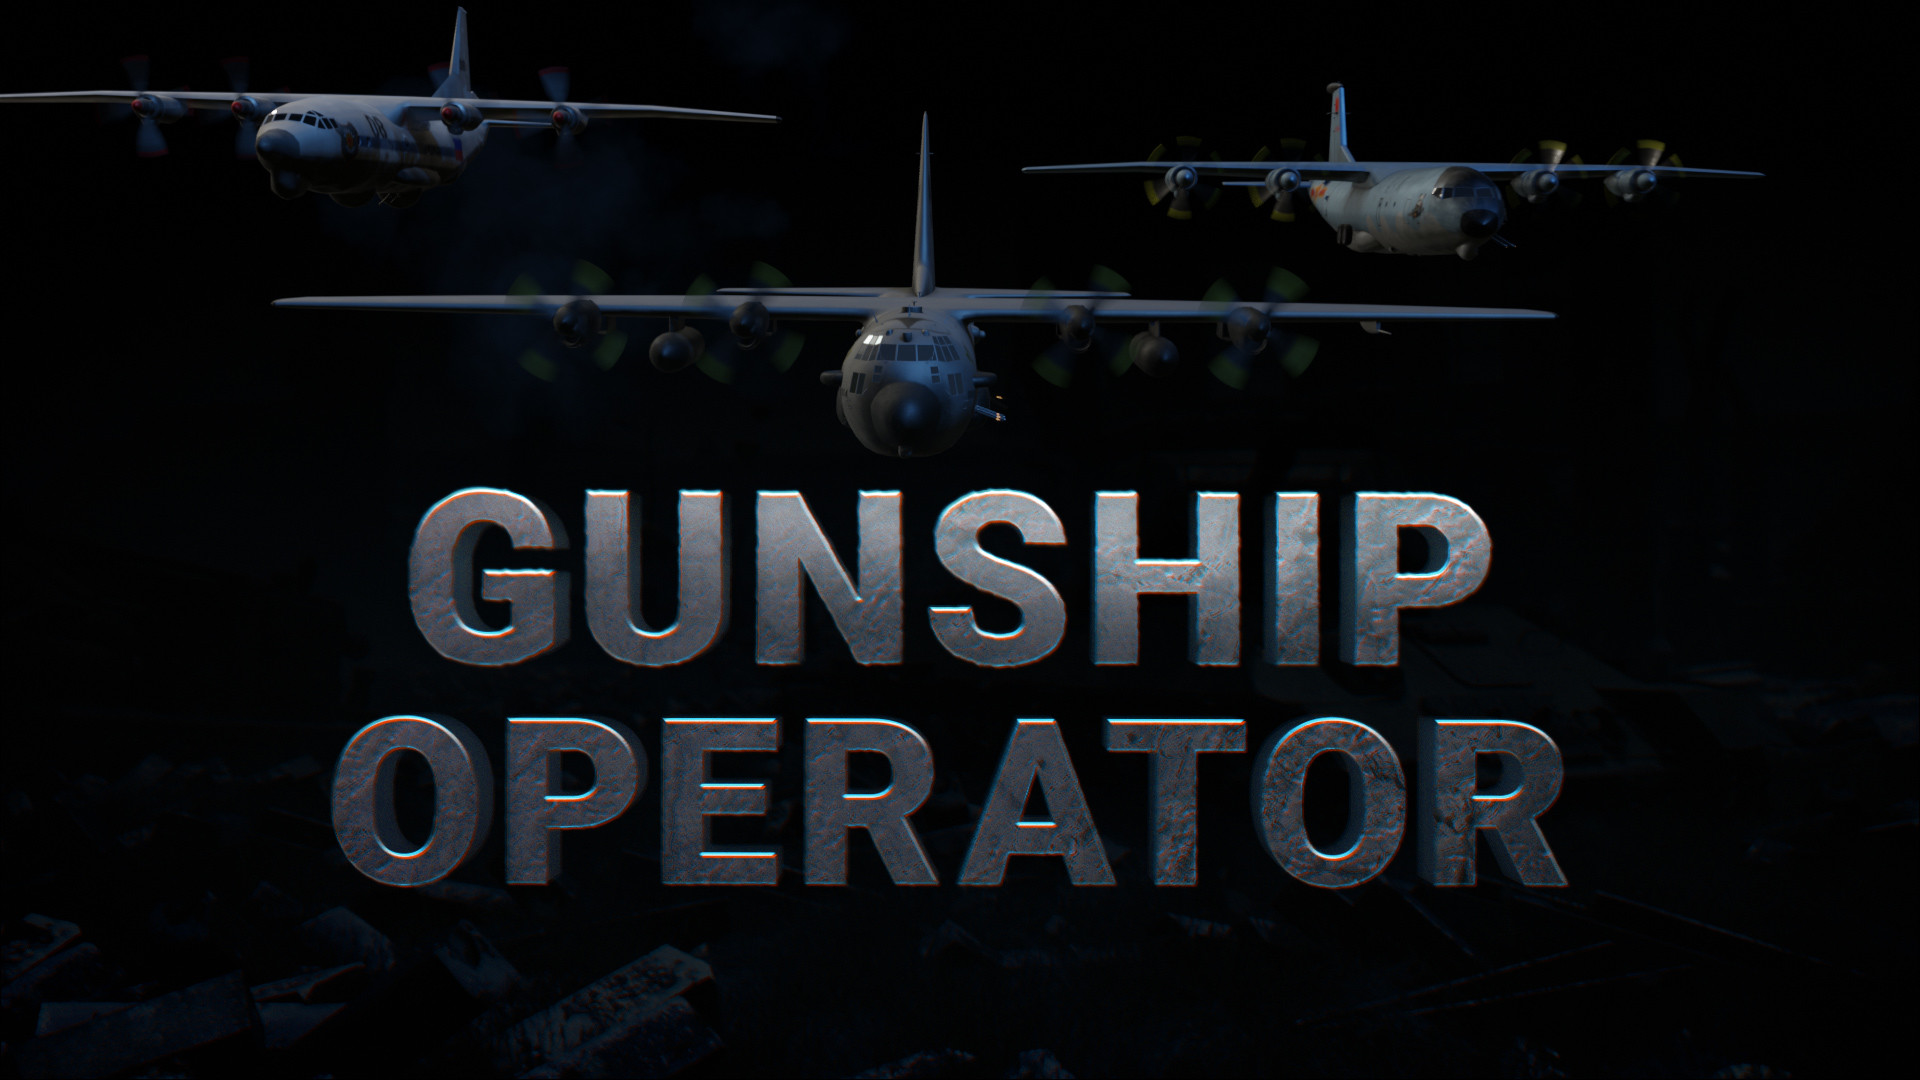 AC-130 Gunship Operator on Steam